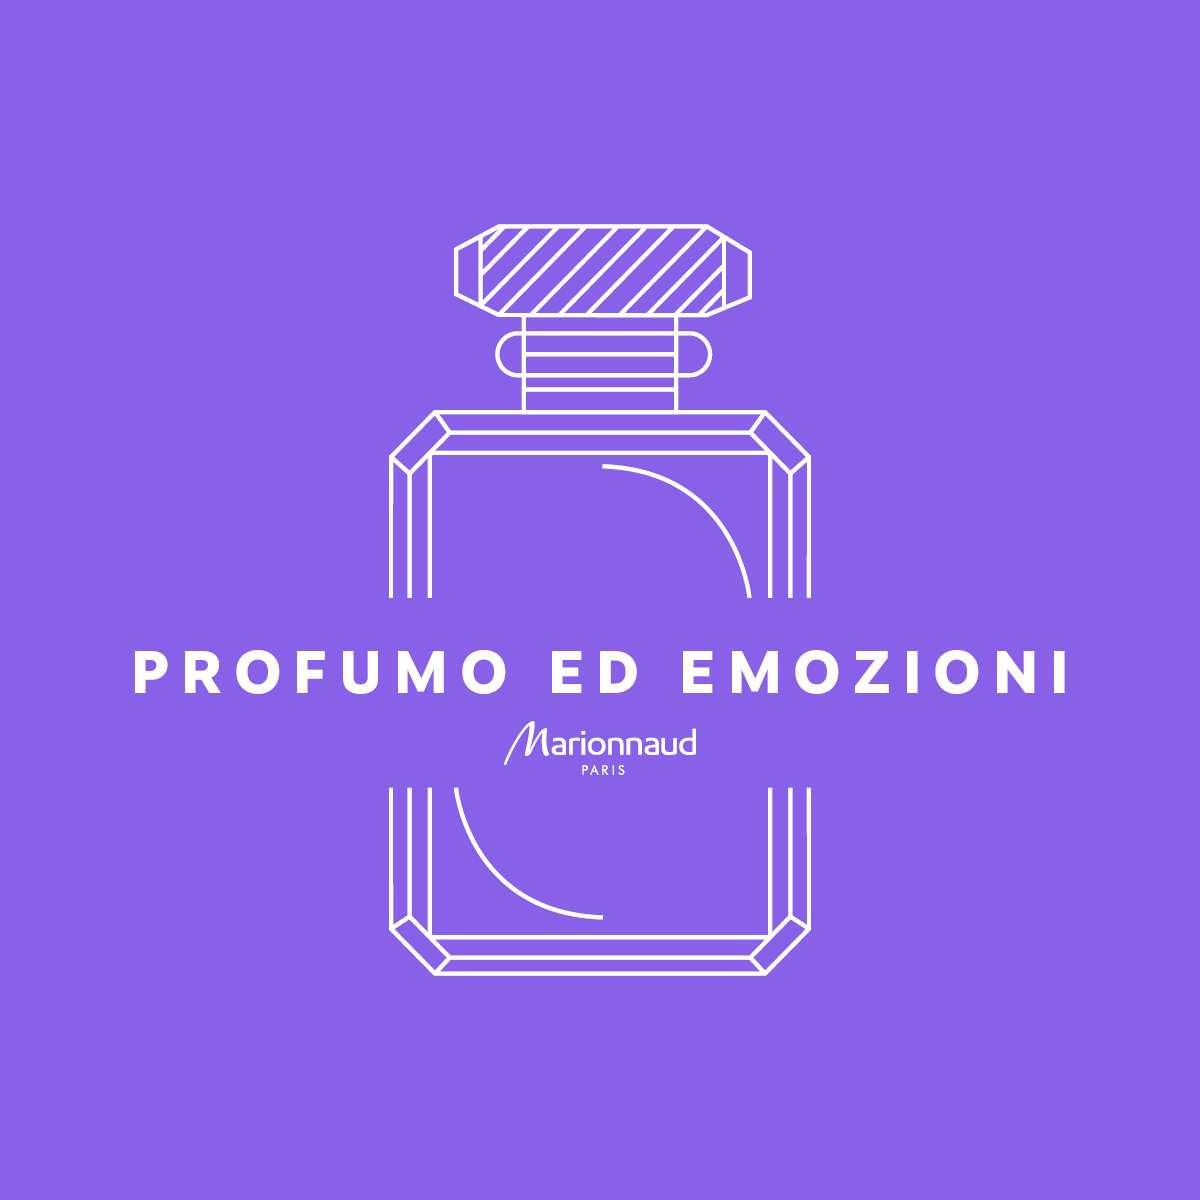 PROFUMO ED EMOZIONI @MARIONNAUD - Accademia del profumo